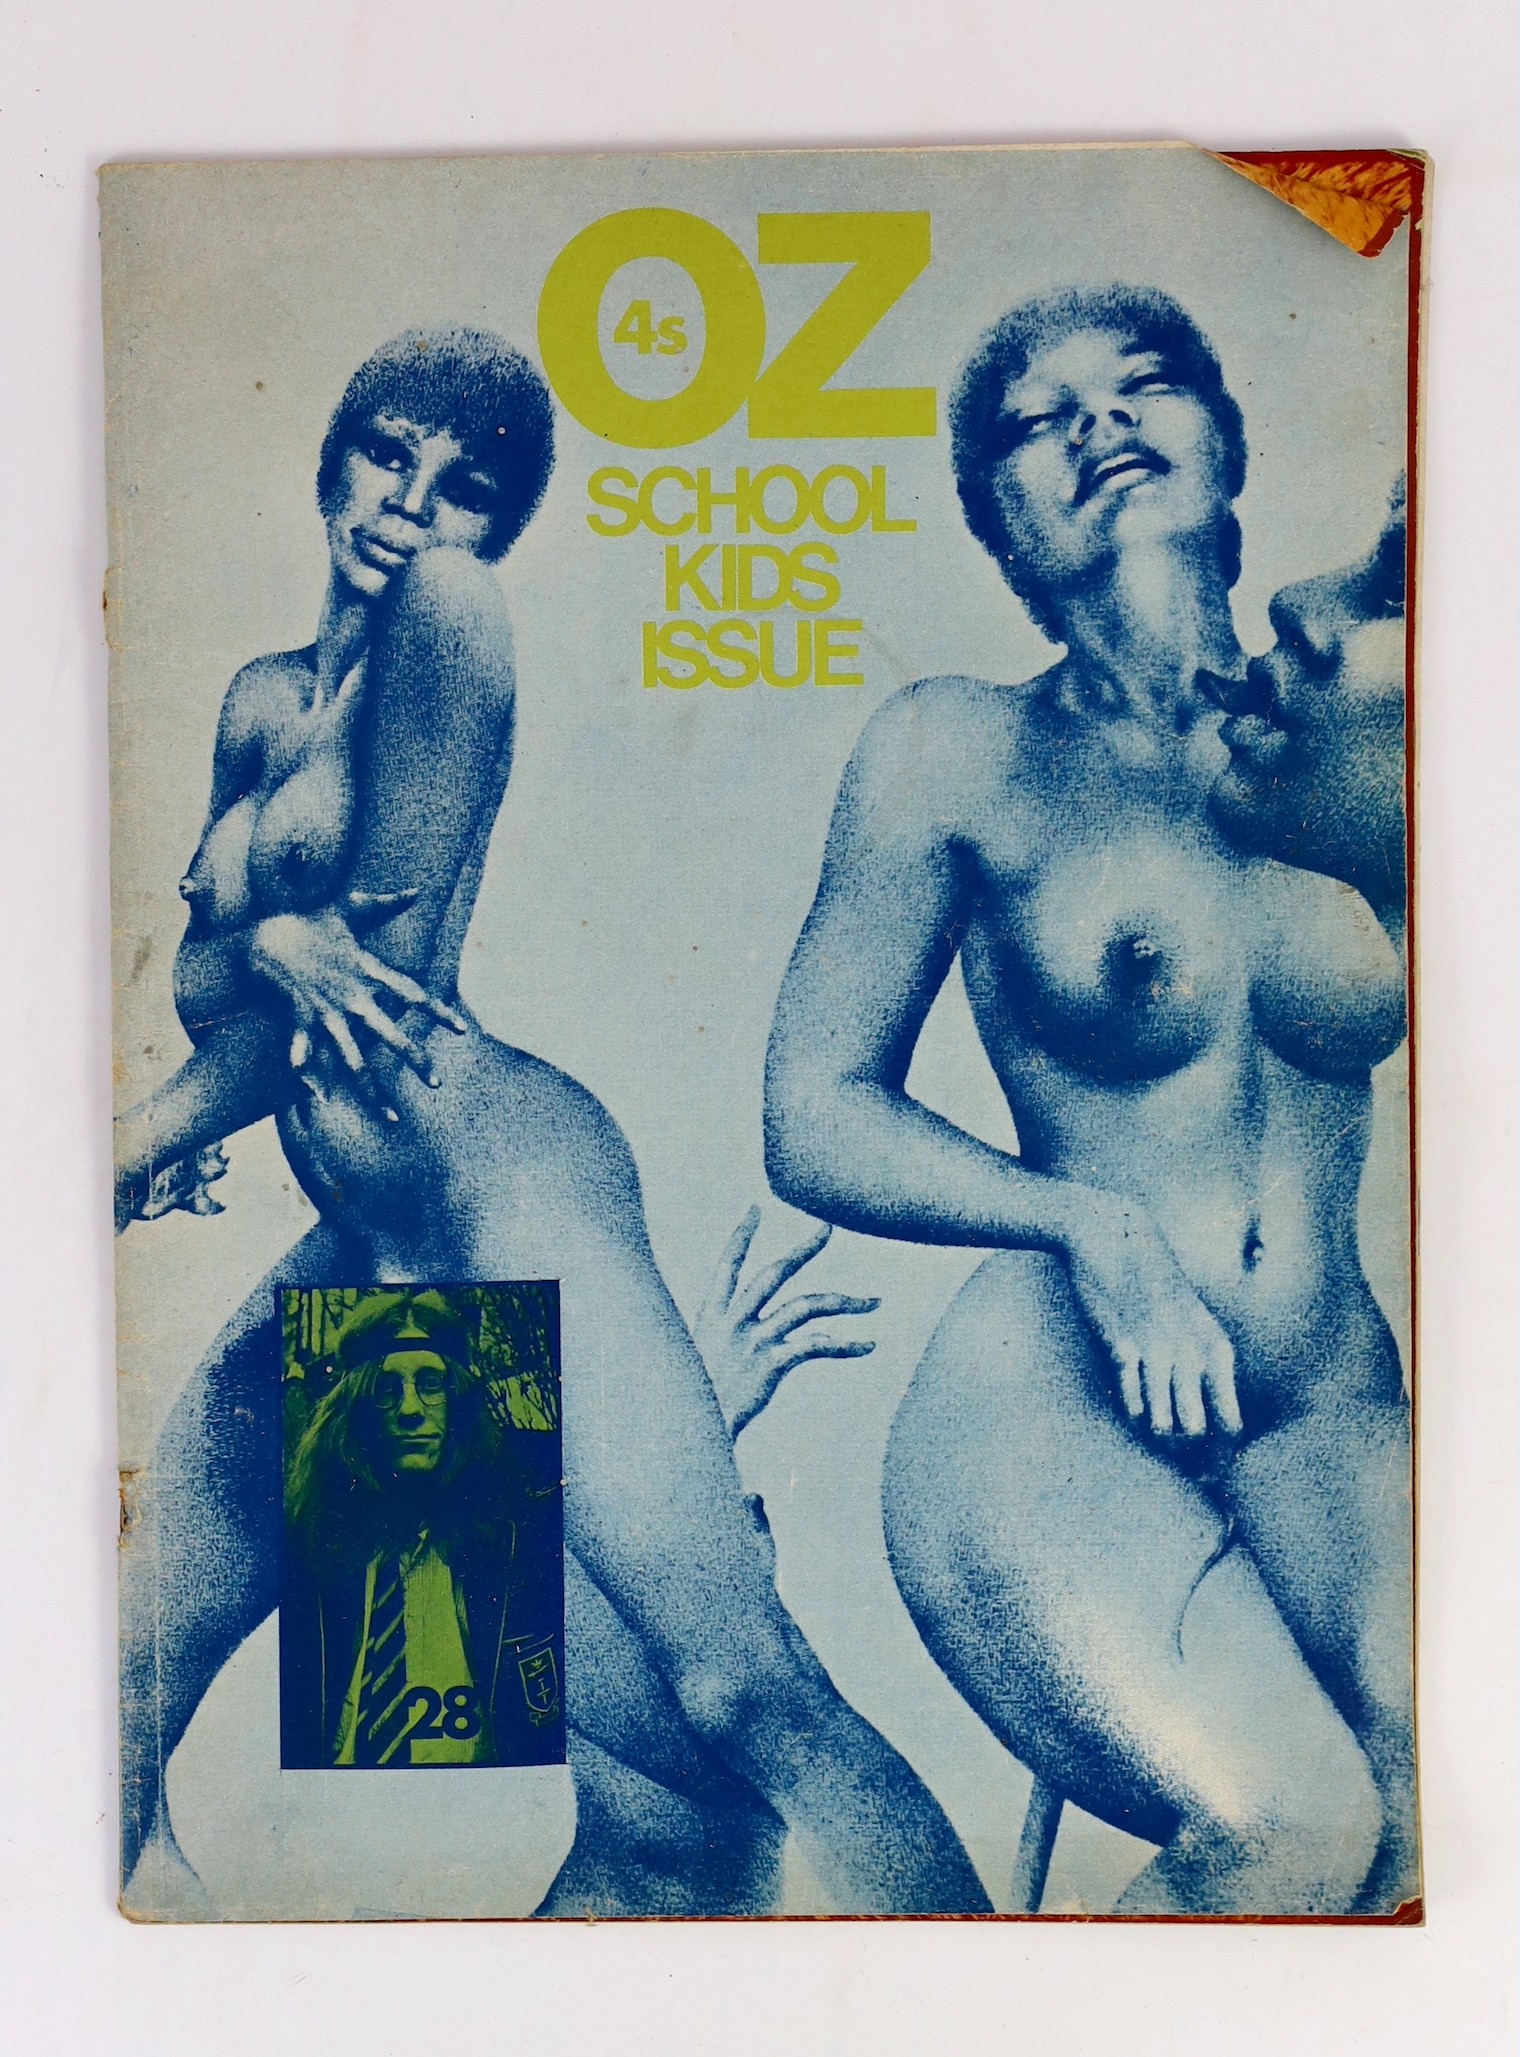 Neville, Ricard (editor) - Oz Magazine No.28 School Kids Issue, folio, paper wraps, Oz Ink Publications, London, 1970